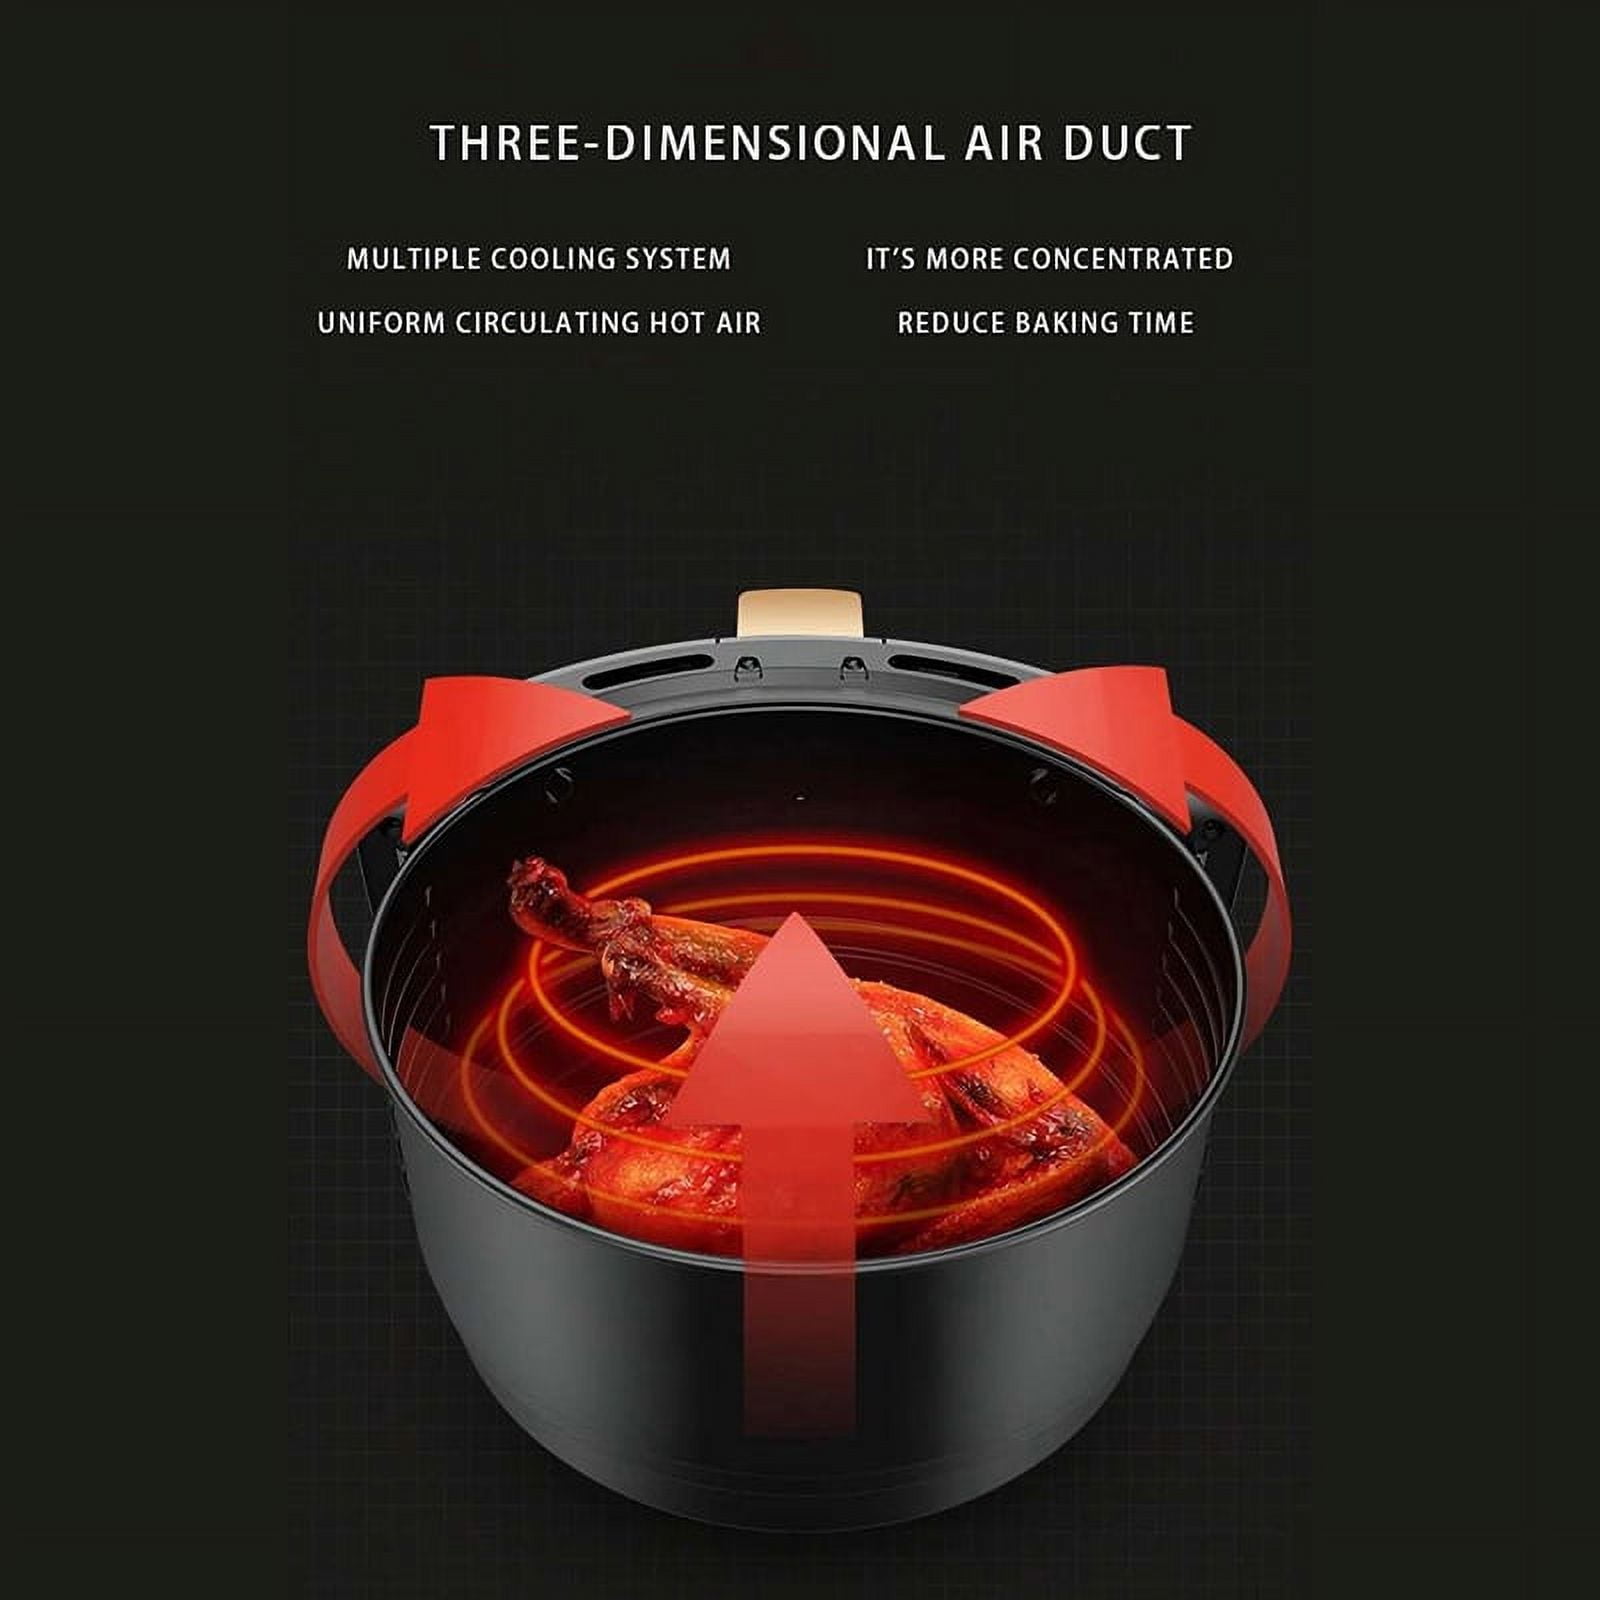 TaoTronics Air Fryer AF005, 4-Quart Oil-less Cooker, Free Cooker with